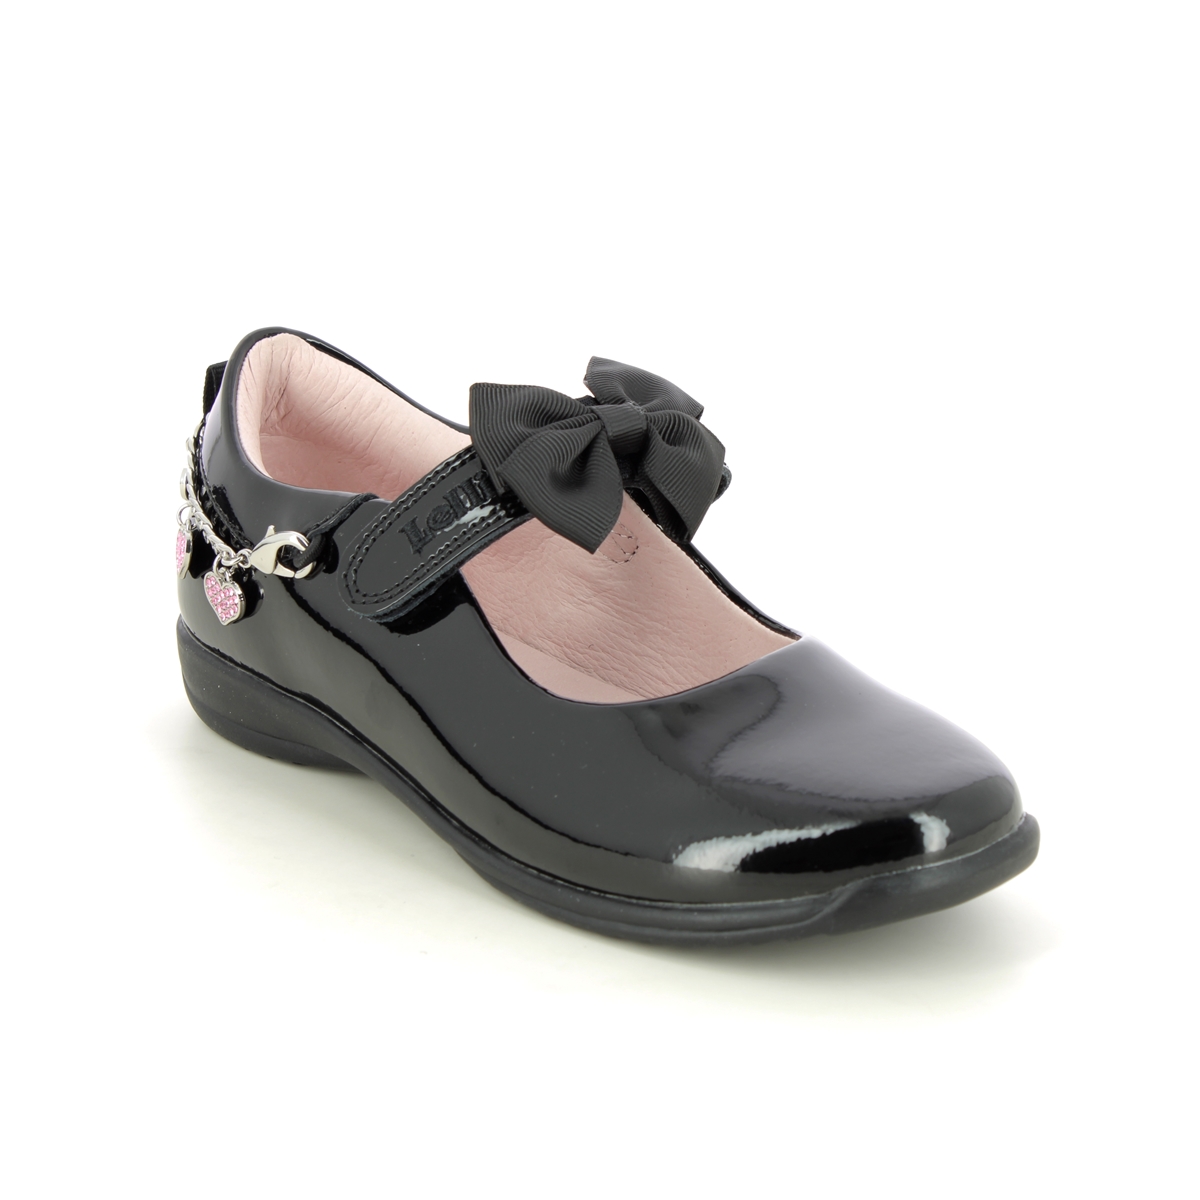 Lelli Kelly - Angel Bracelet F In Black Patent Lk8224-Db01 In Size 34 In Plain Black Patent Girls Shoes  In Black Patent For School For kids